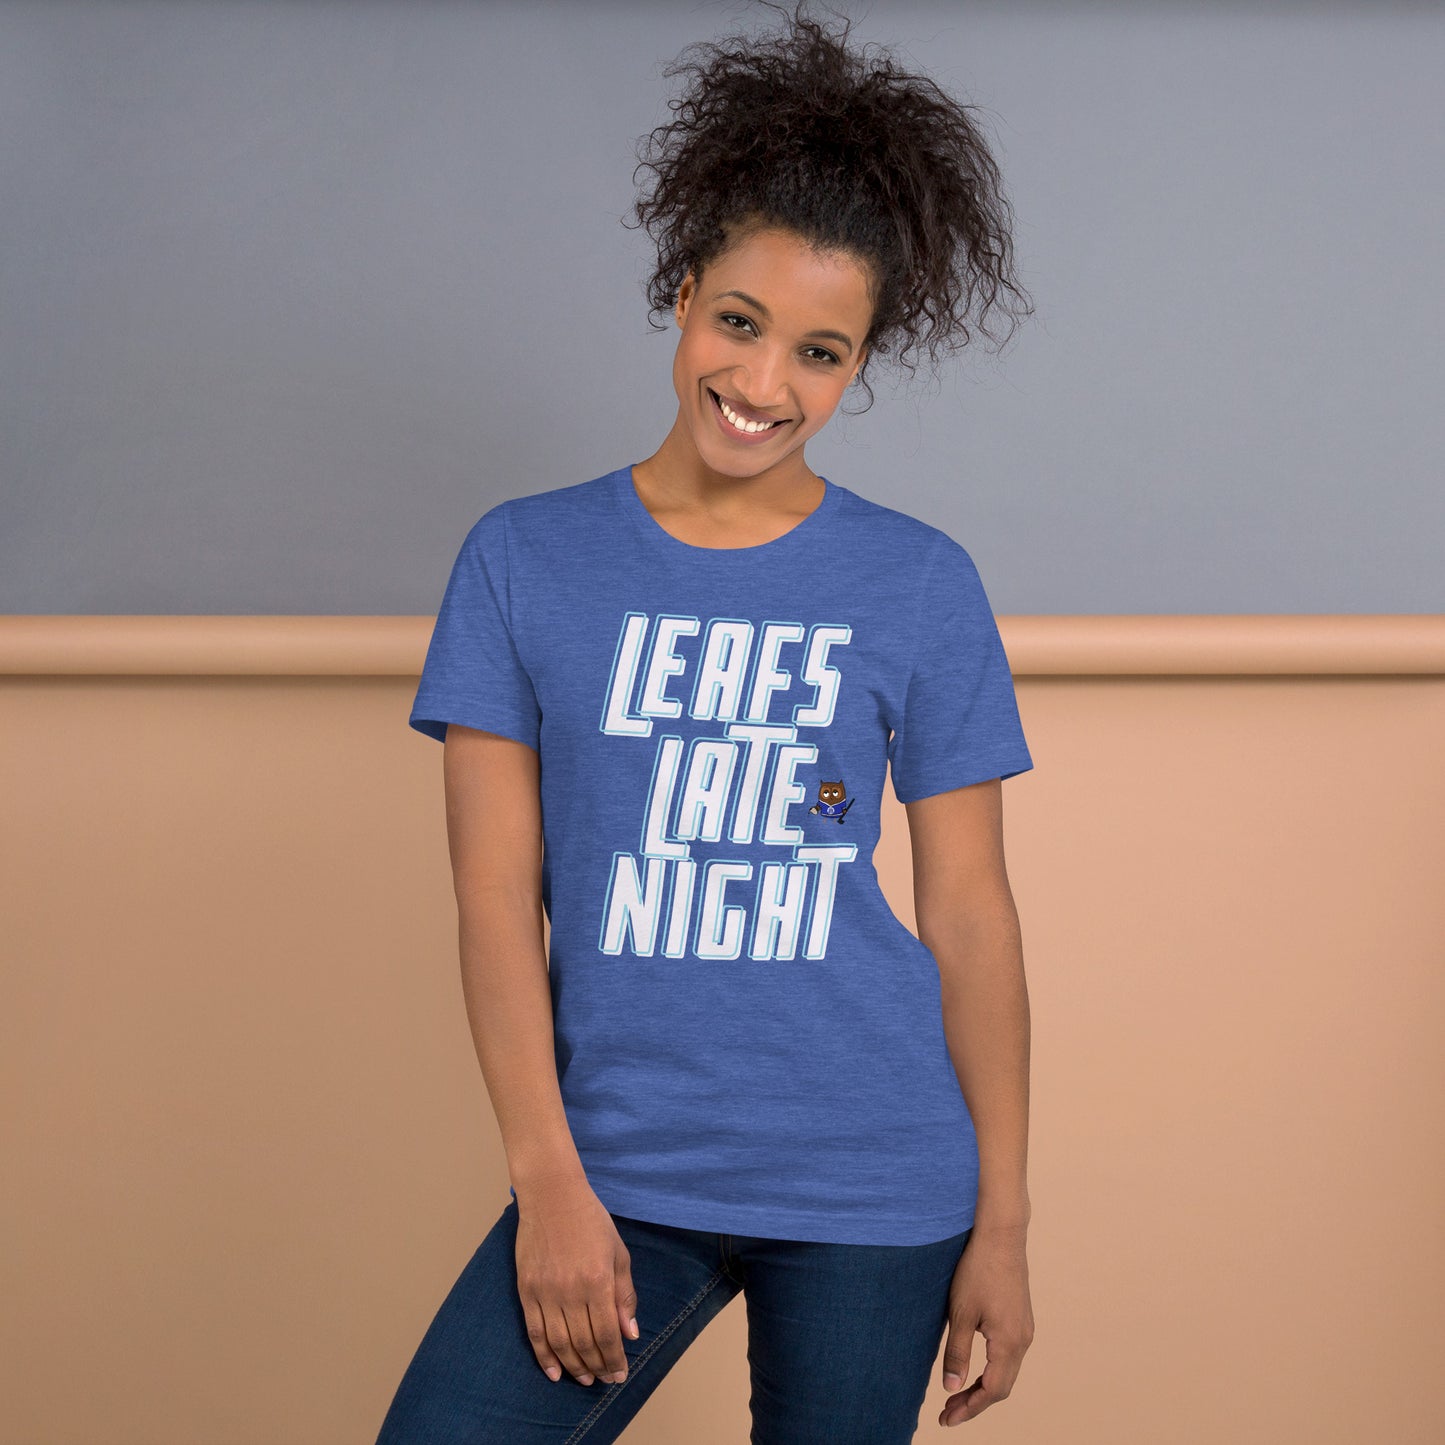 Leafs Late Night t-shirt